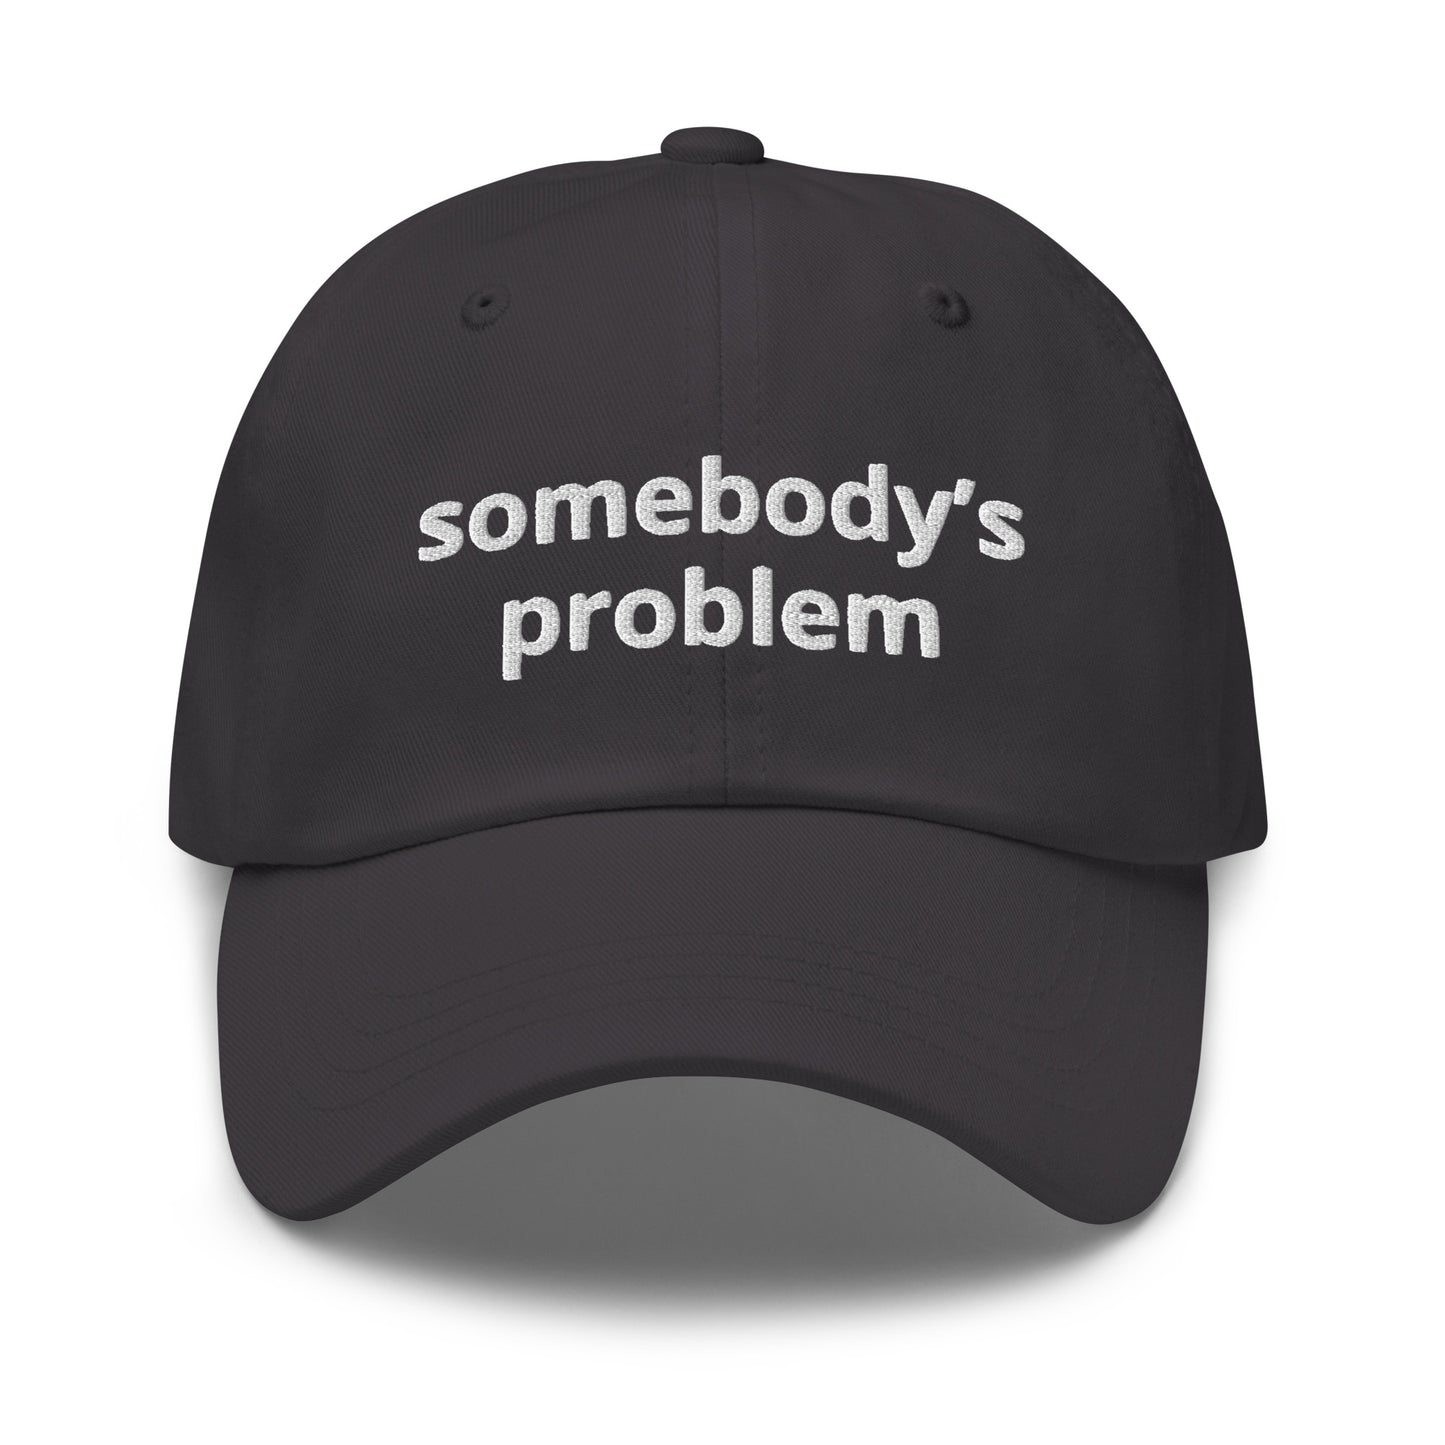 Somebody's problem dad hat